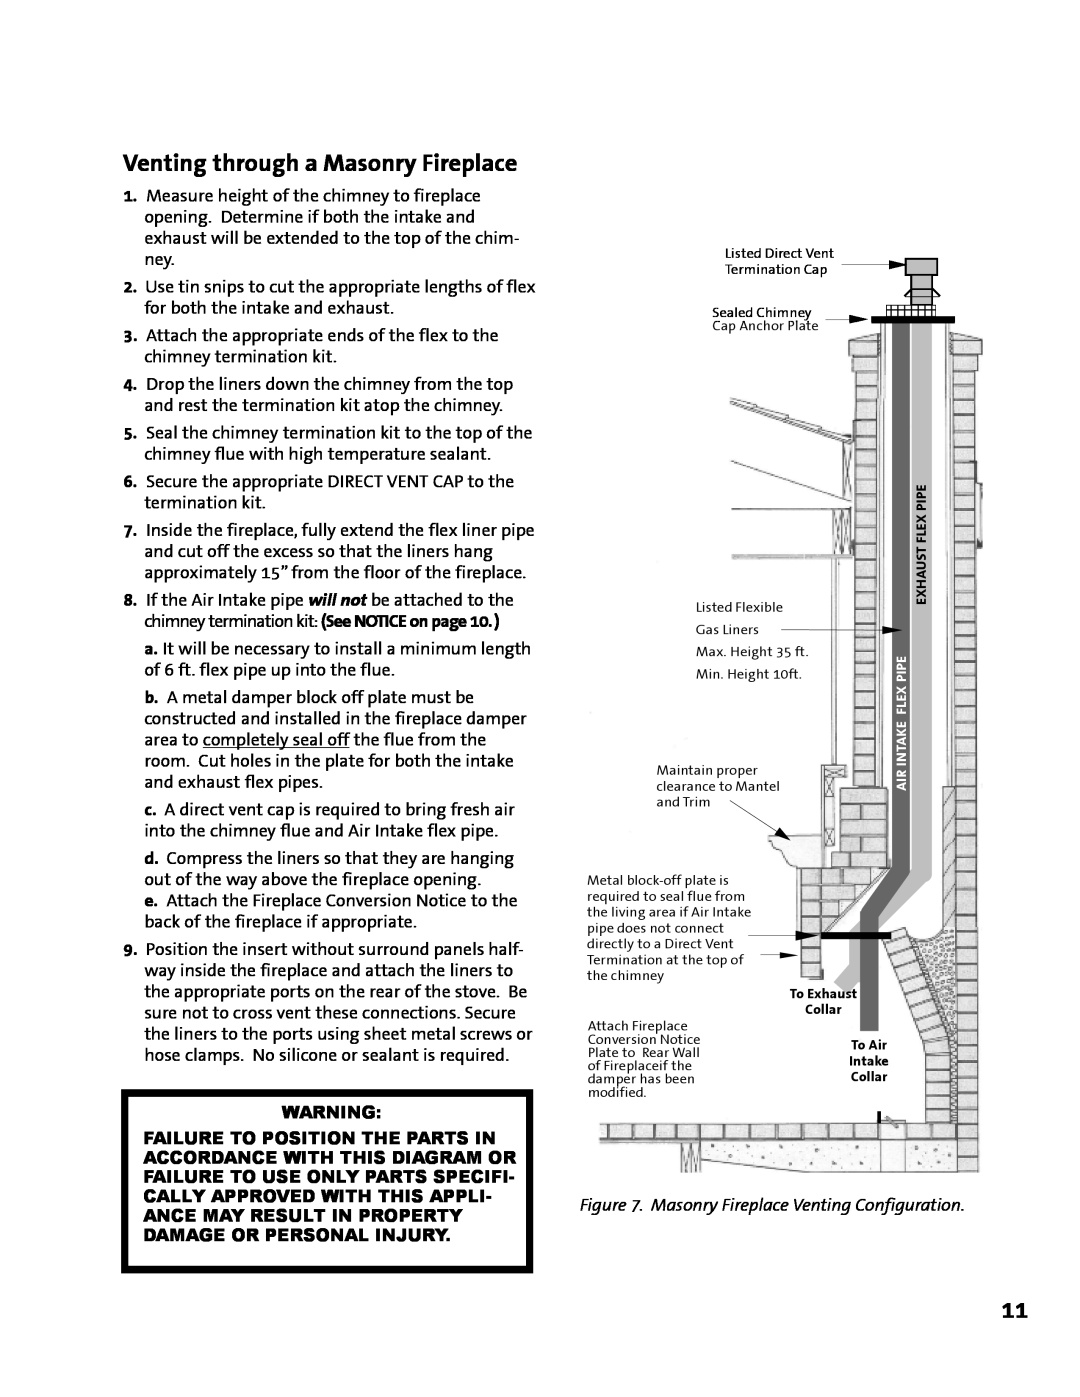 Jotul GI 425 DV manual Venting through a Masonry Fireplace, Masonry Fireplace Venting Configuration 